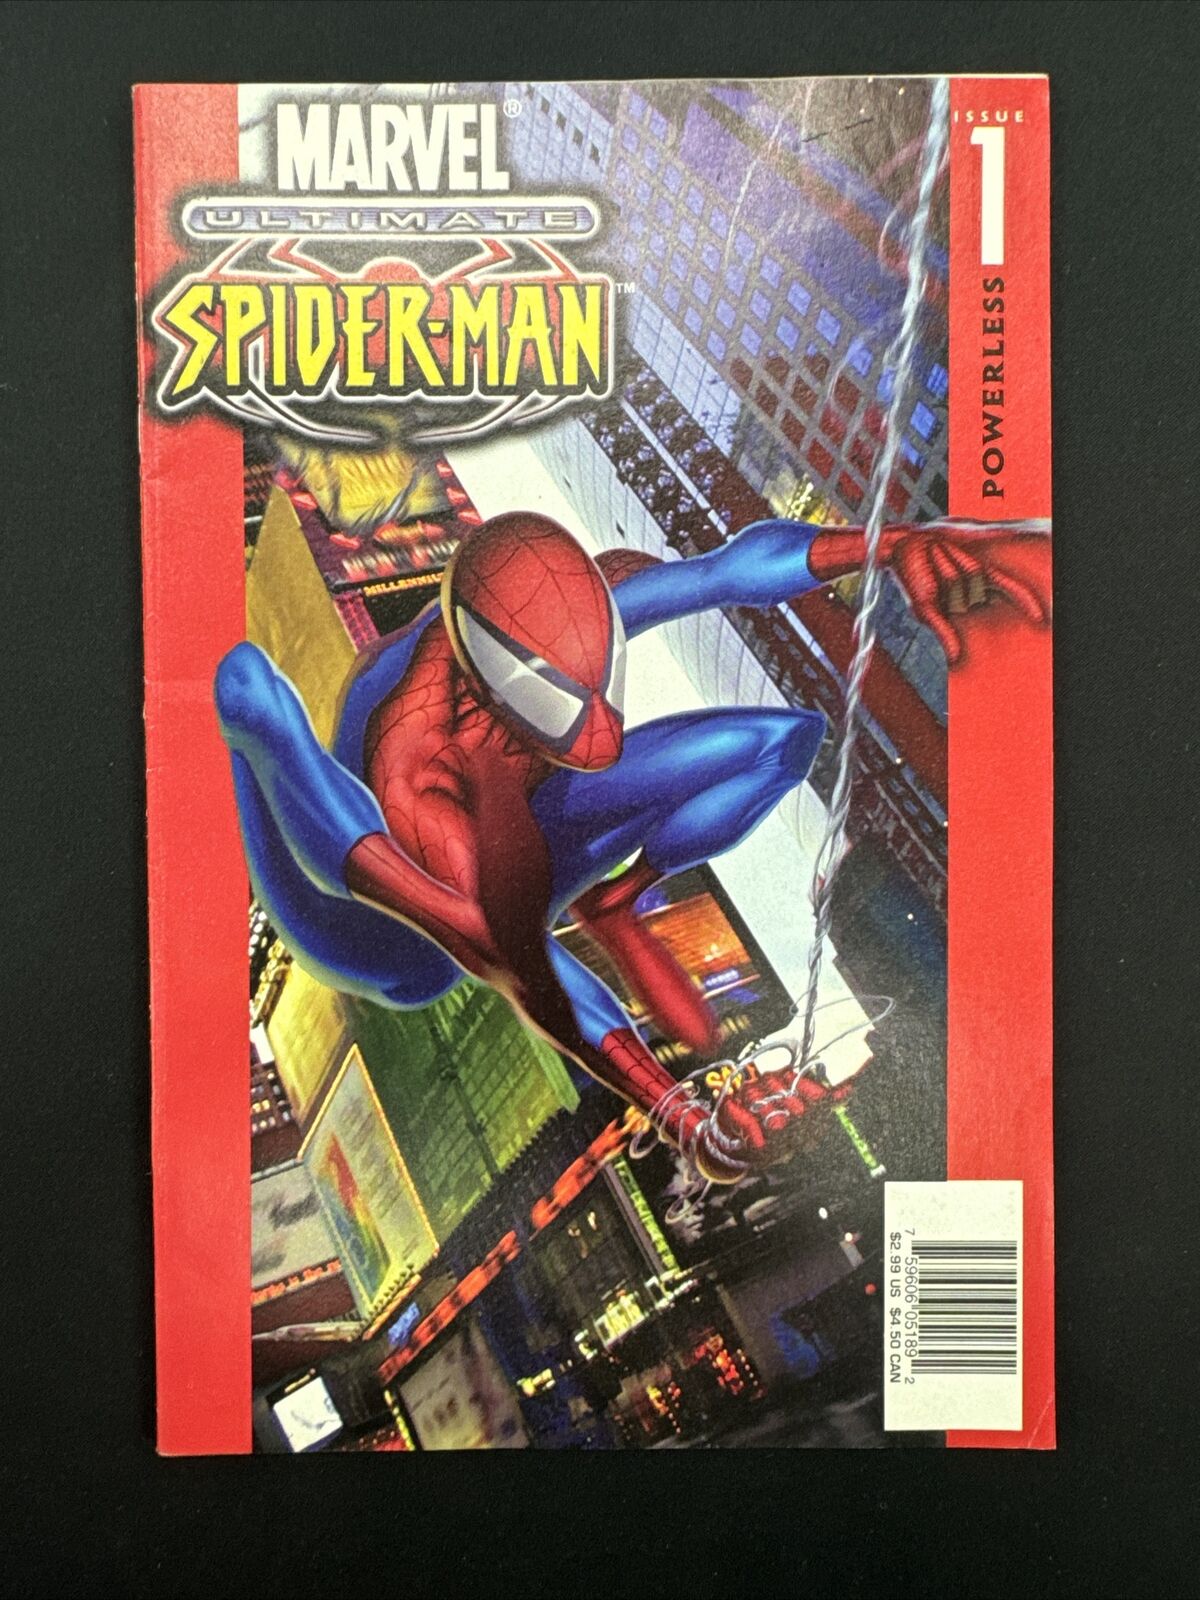 Ultimate Spider-Man #1 (Marvel Comics November 2000)